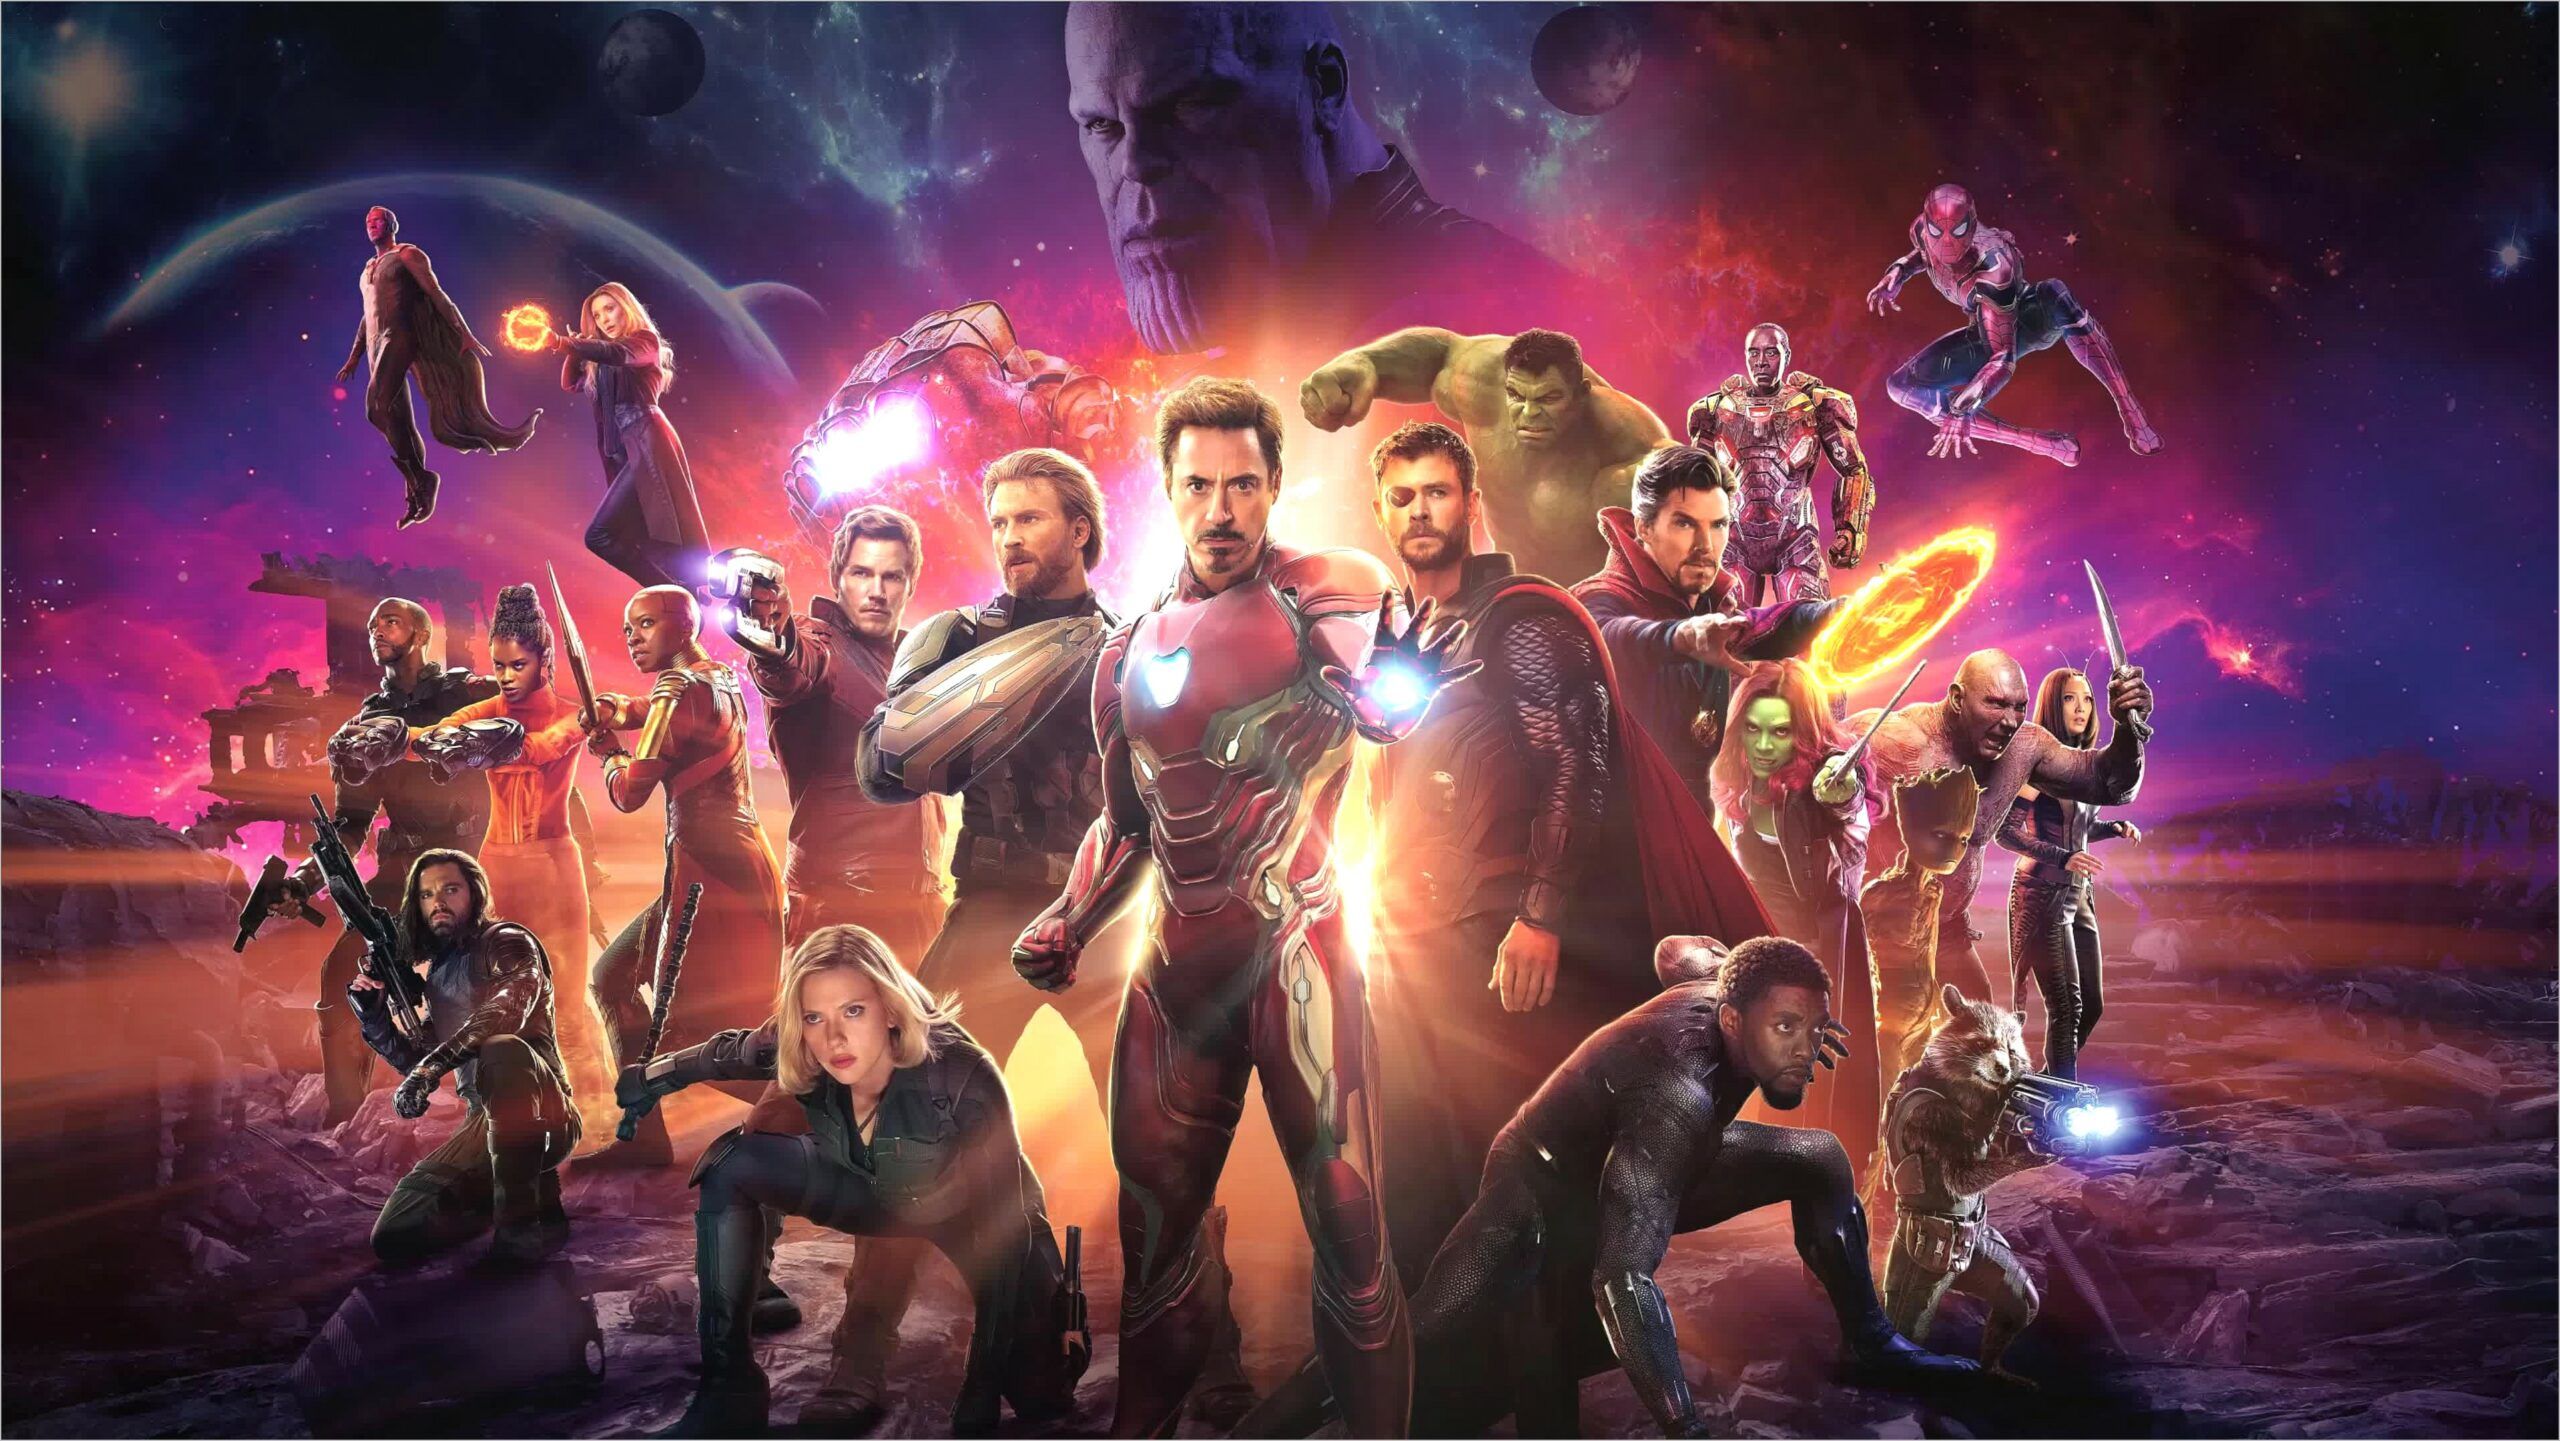 Avengers Character Wallpaper Series 4k Mcu. All marvel movies, Marvel movies, Avengers characters